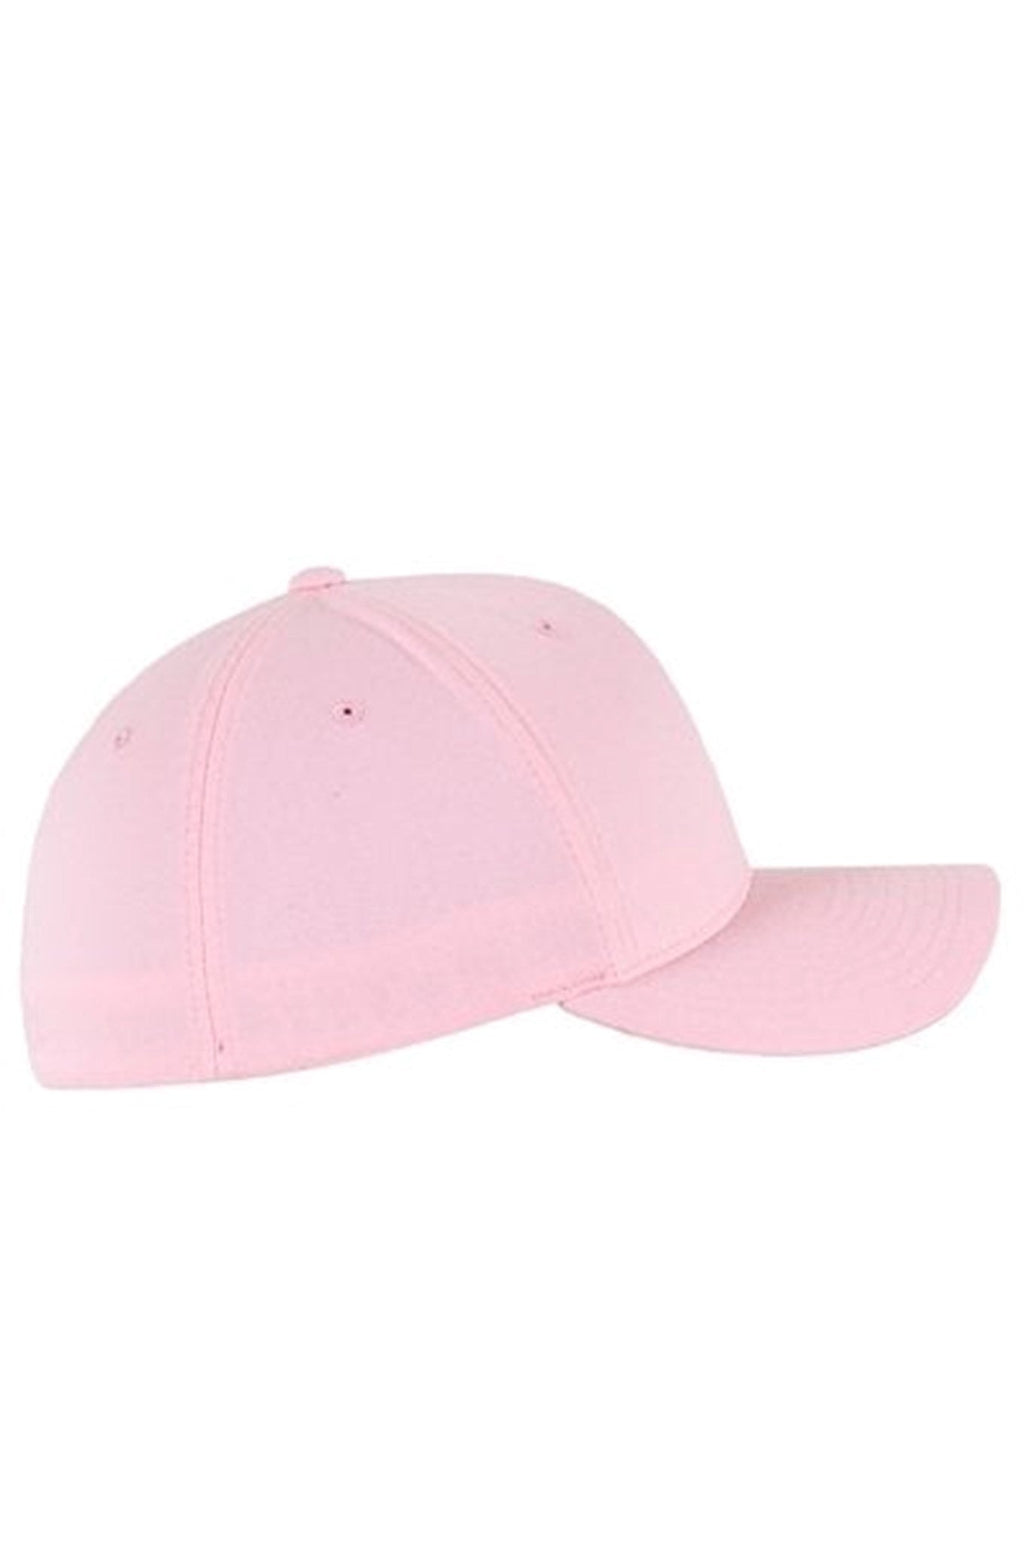 FlexFit原始棒球帽 - 粉红色